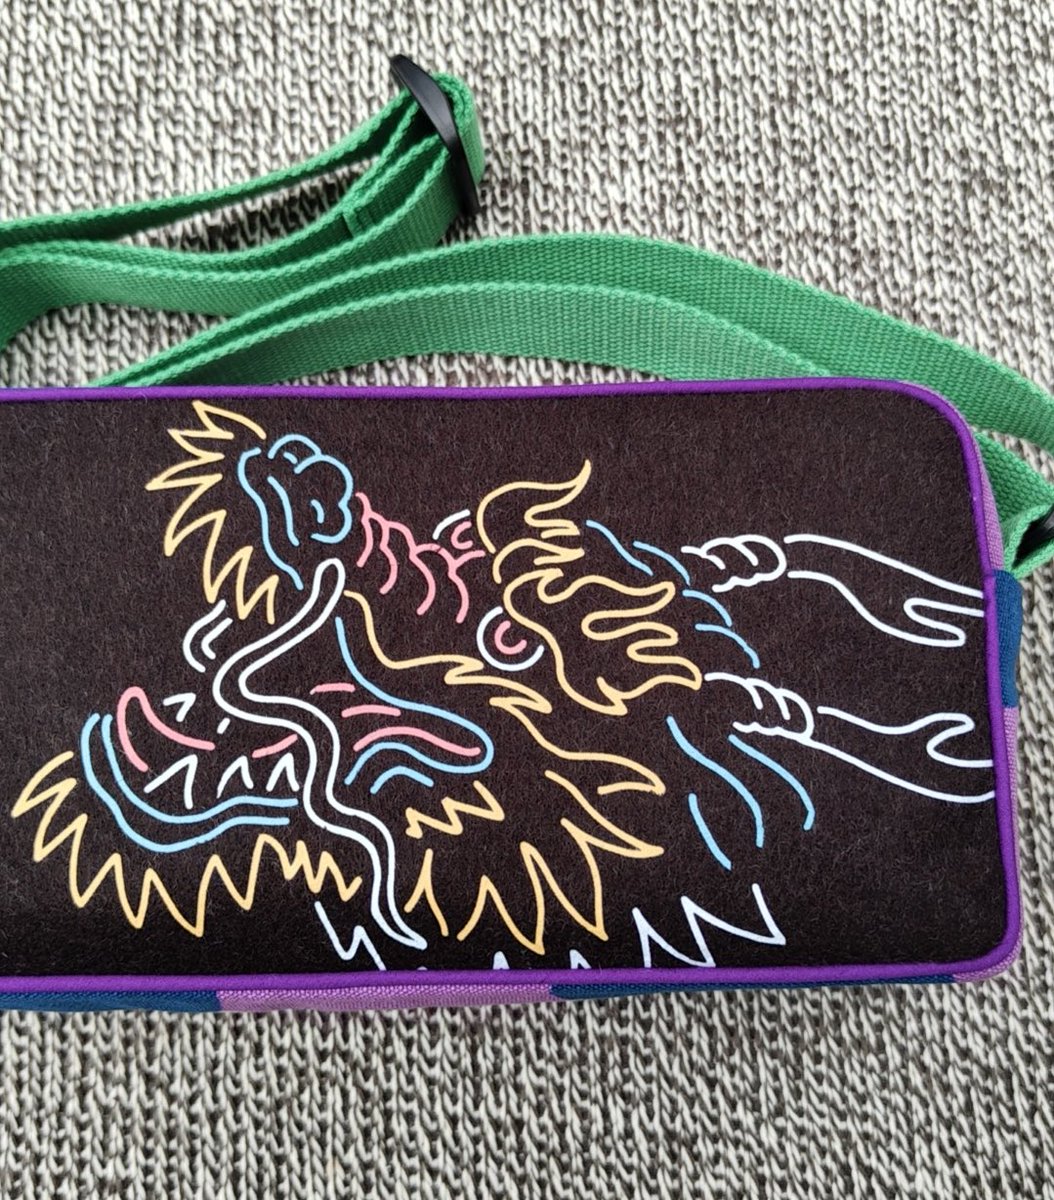 Dragon shoulder bag from Suzhou Cobblers.